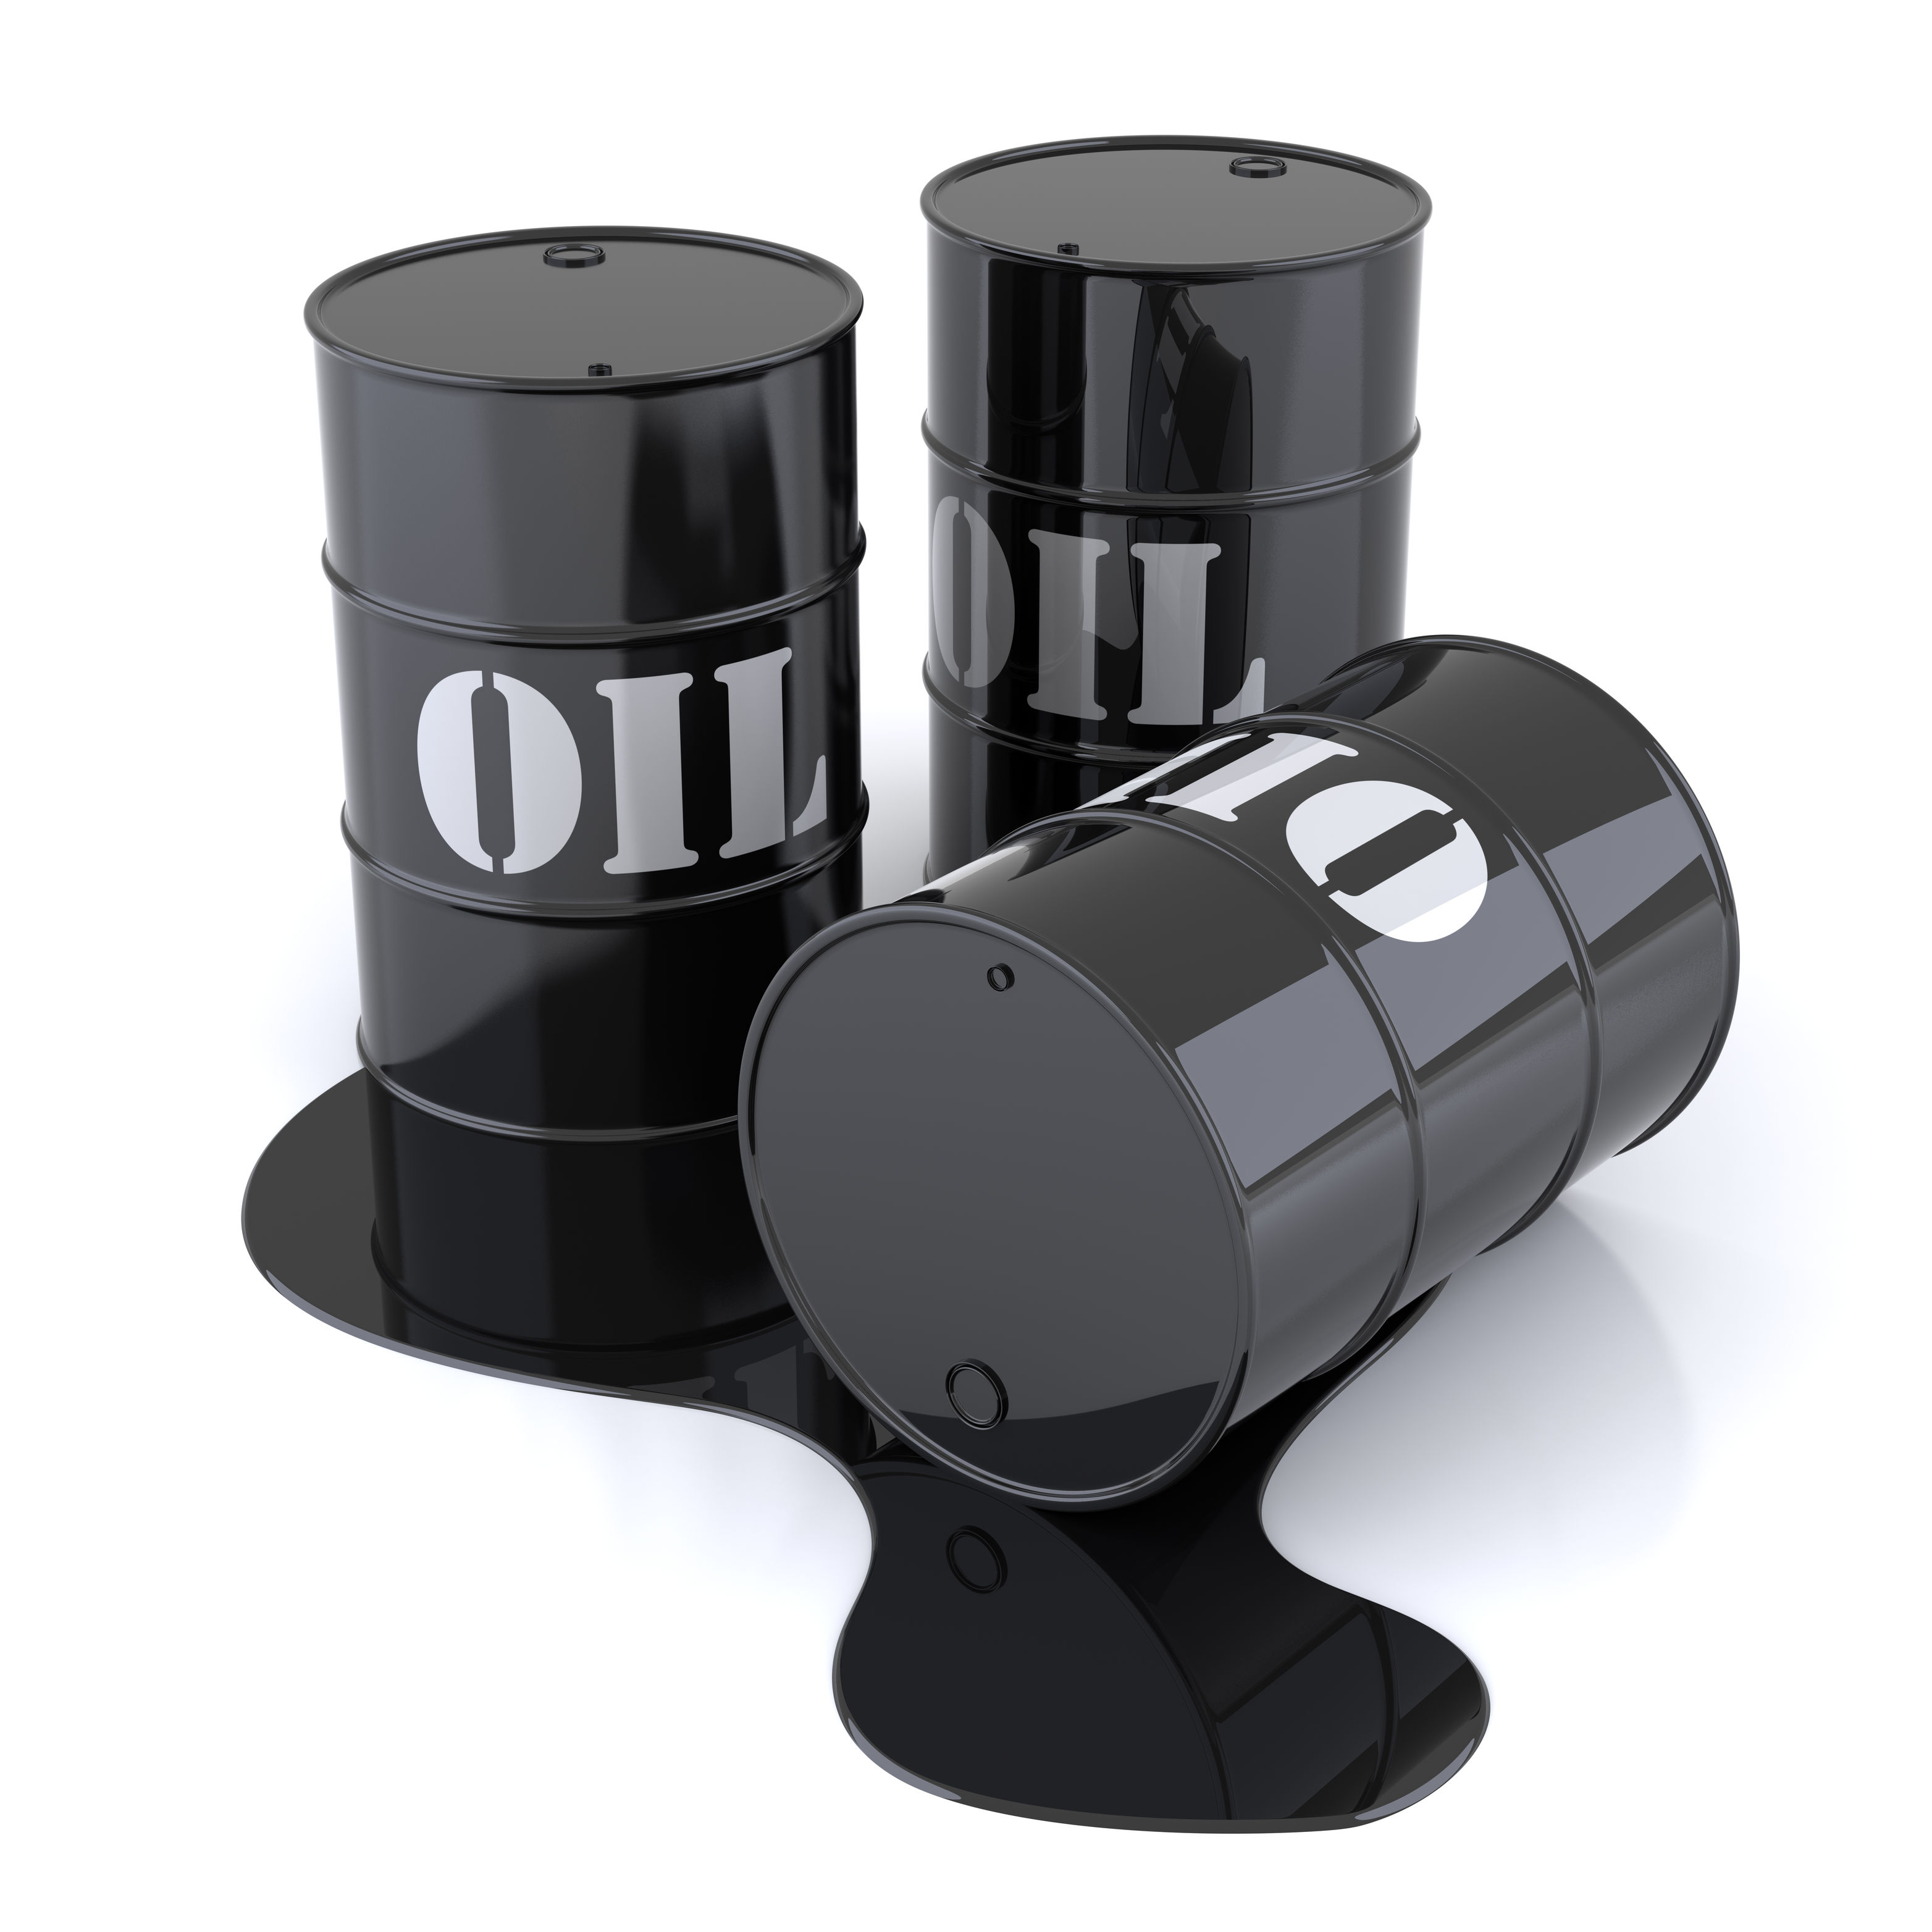 Oil Price War: Crude Oil Goes Negative